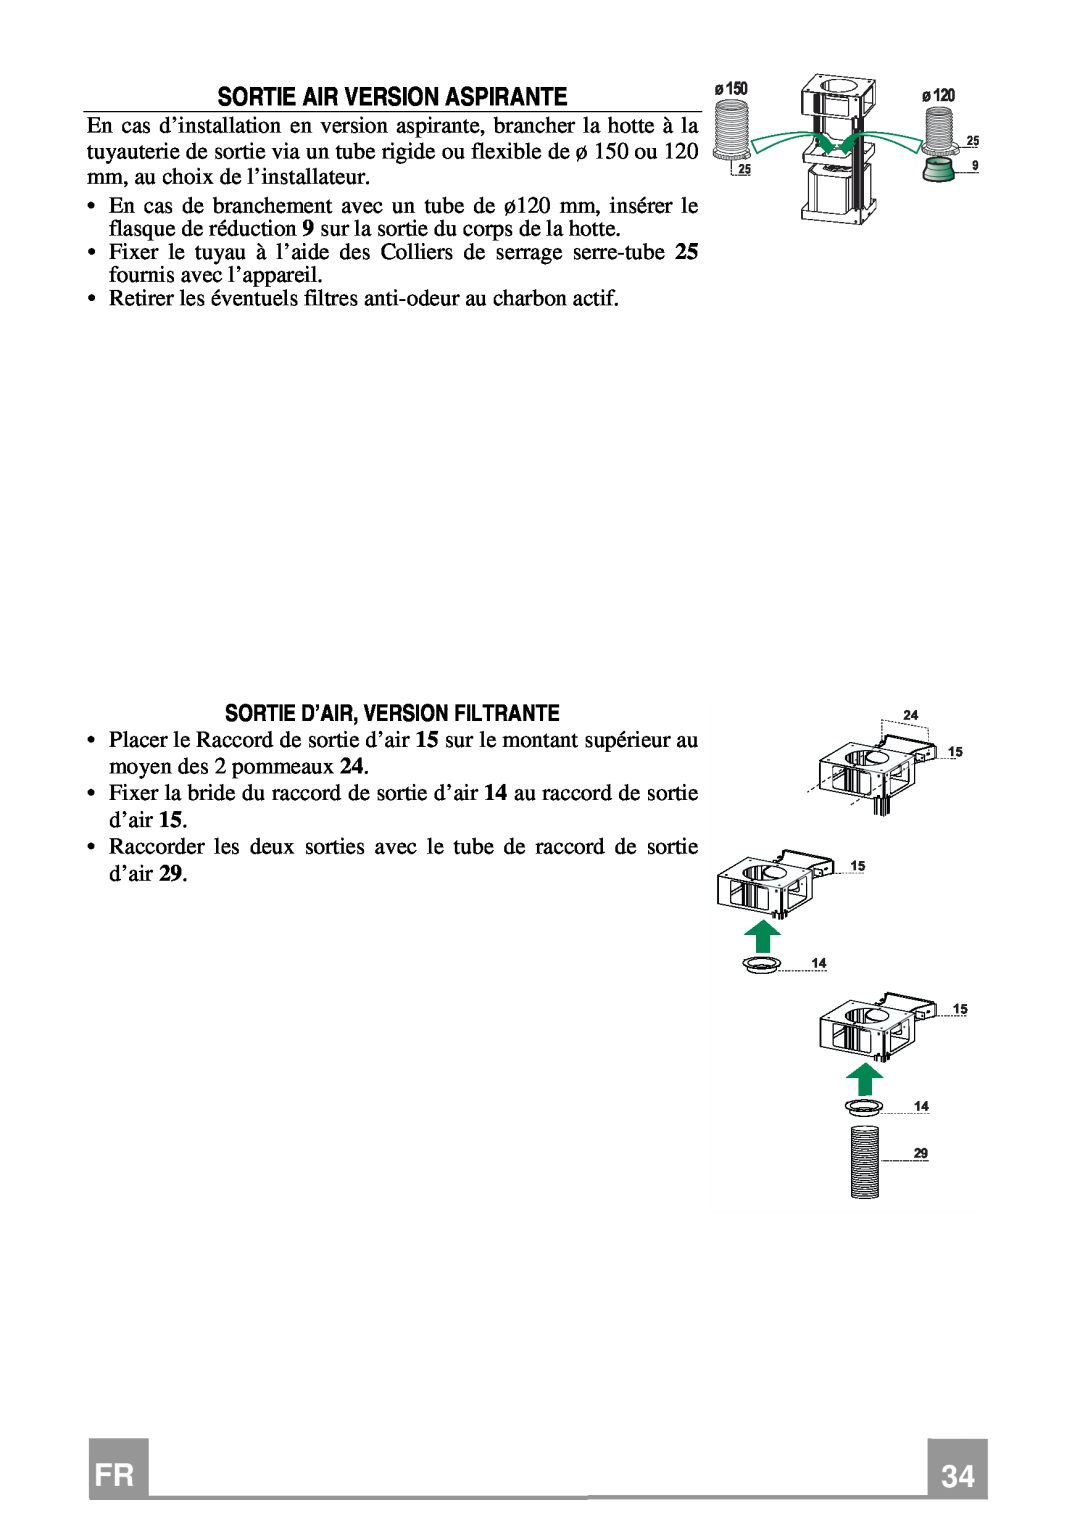 Franke Consumer Products FDMO 607 I manual Sortie Air Version Aspirante, Sortie D’Air, Version Filtrante 